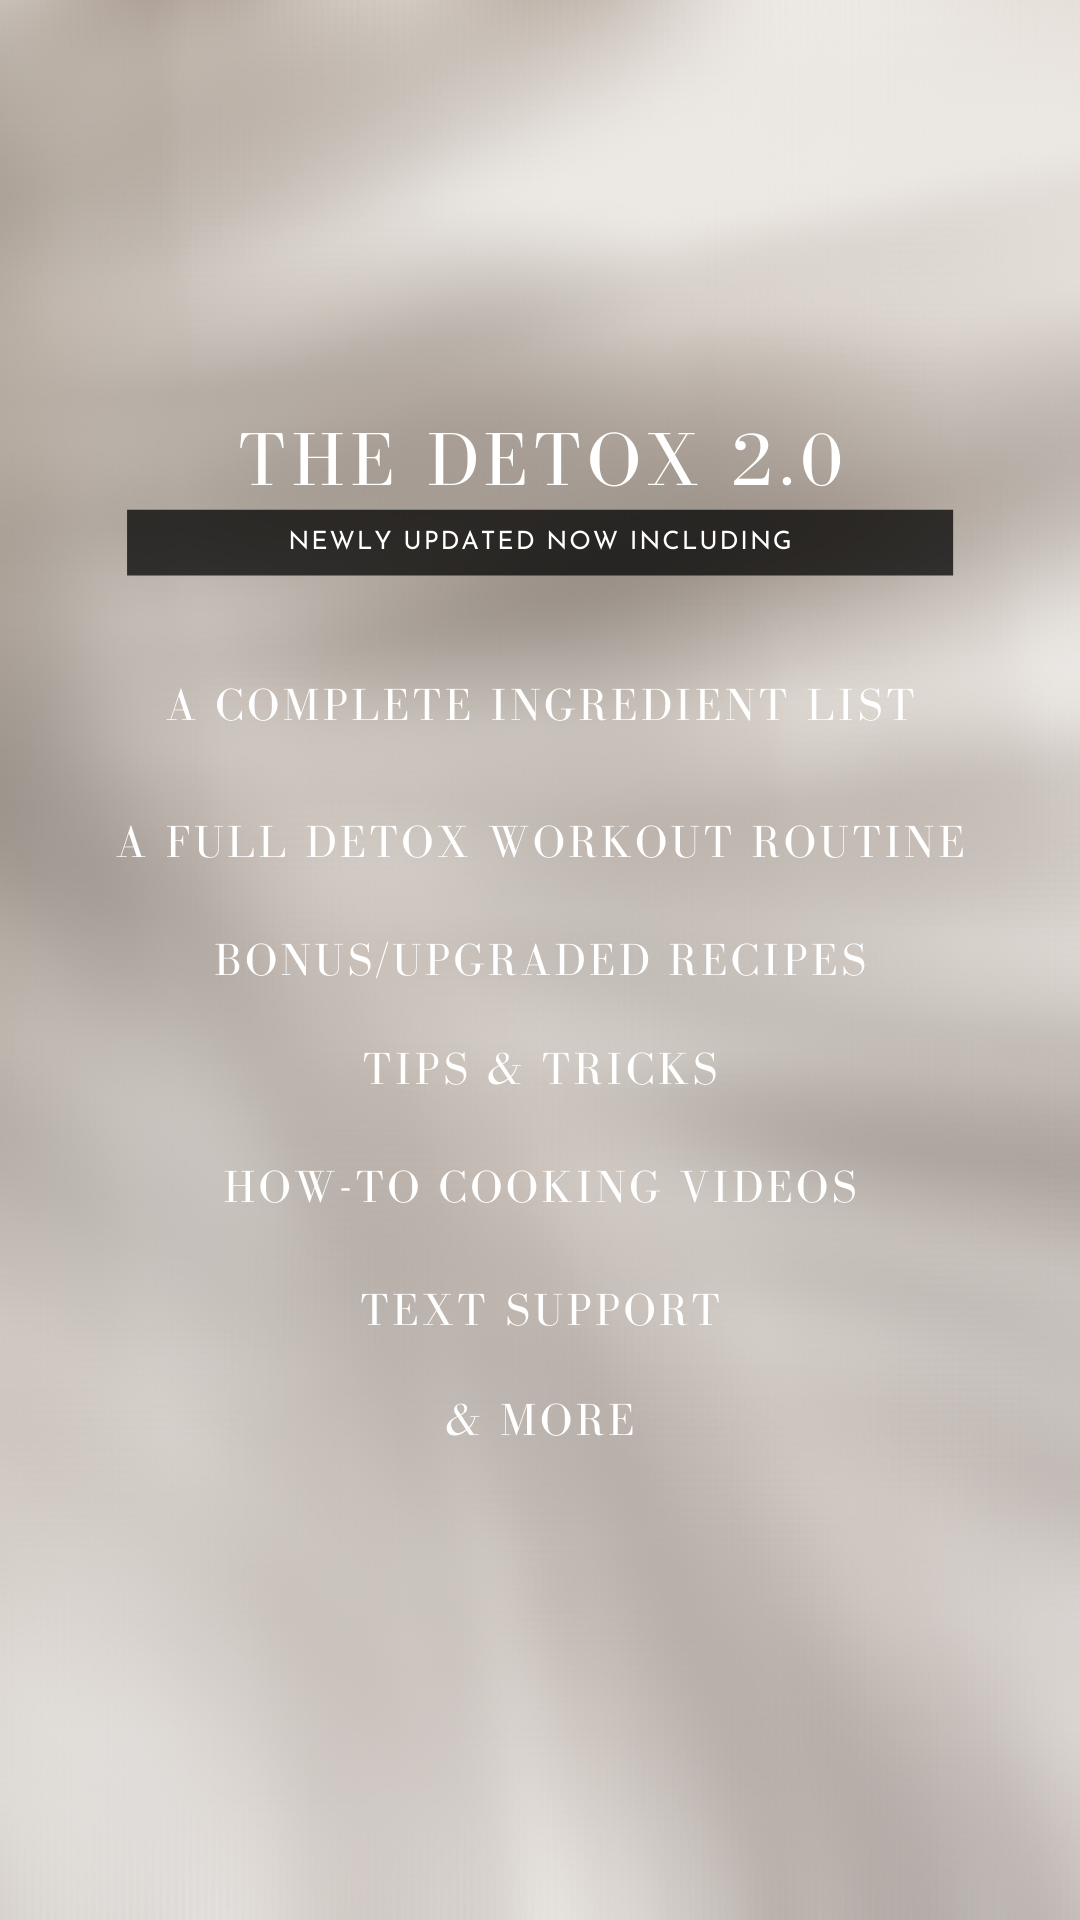 THE DETOX 2.0